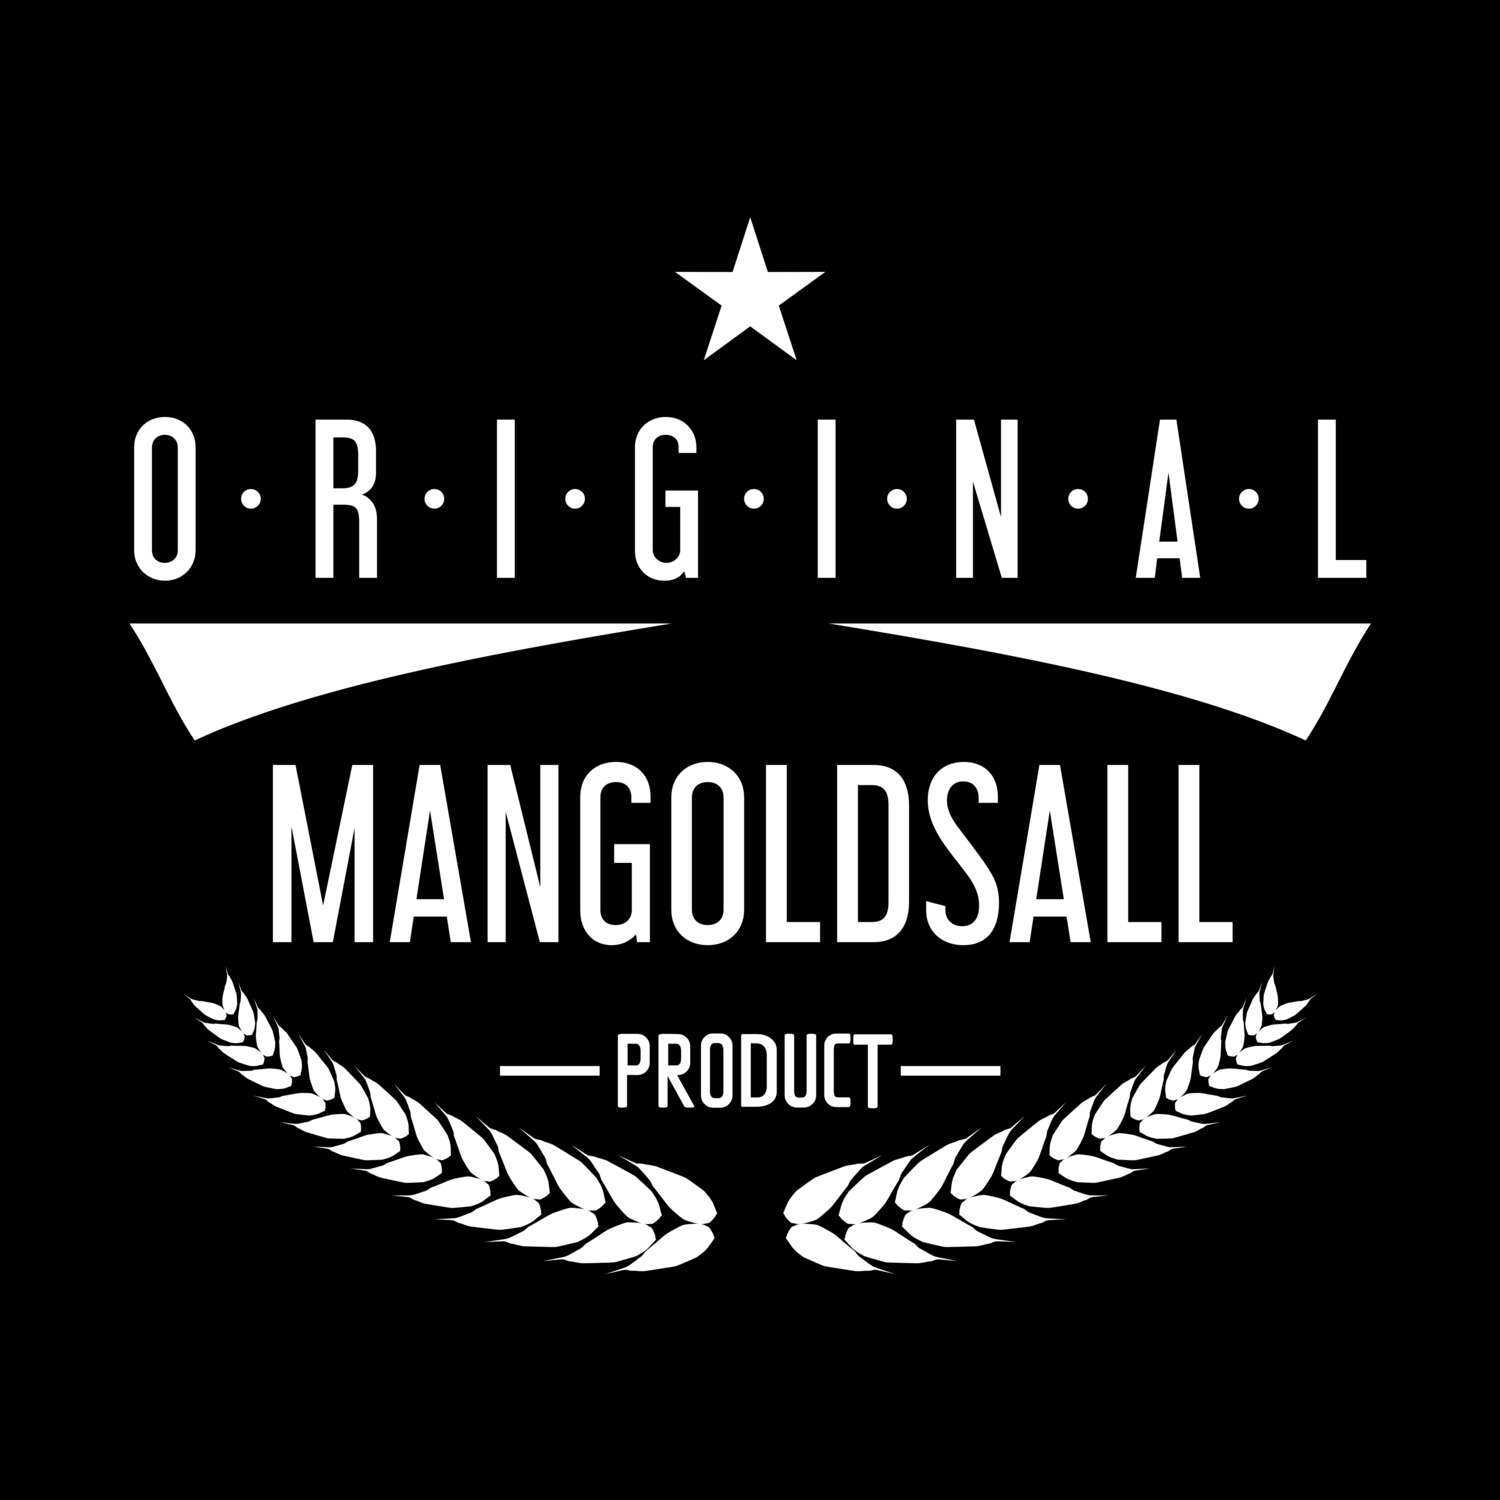 Mangoldsall T-Shirt »Original Product«